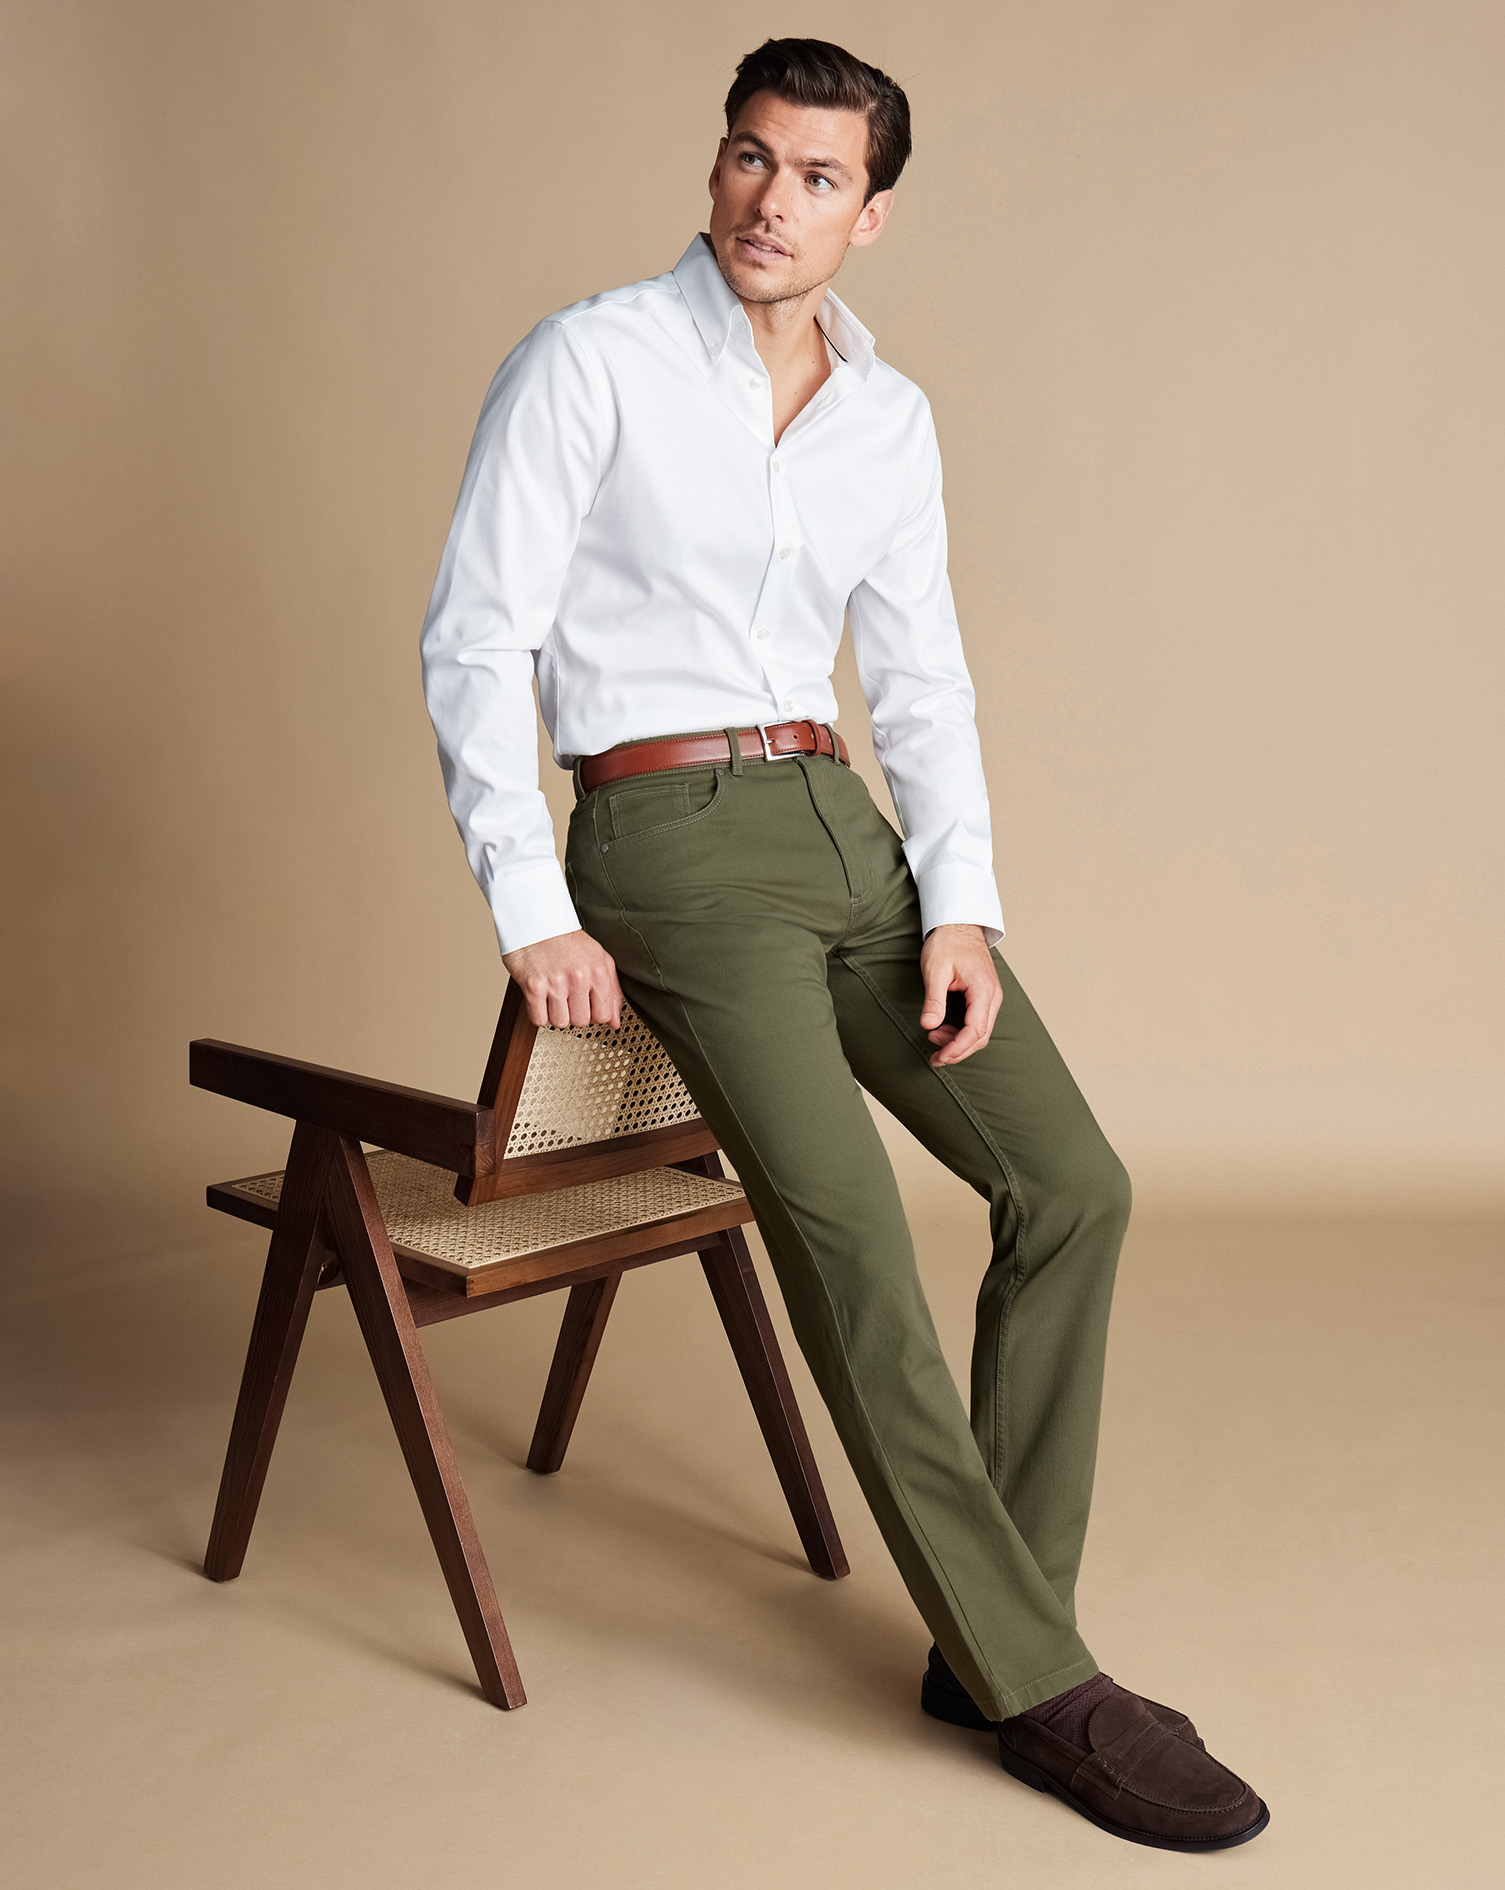 Men's Charles Tyrwhitt Twill 5 Pocket Jeans - Olive Green Size W30 L30 Cotton
